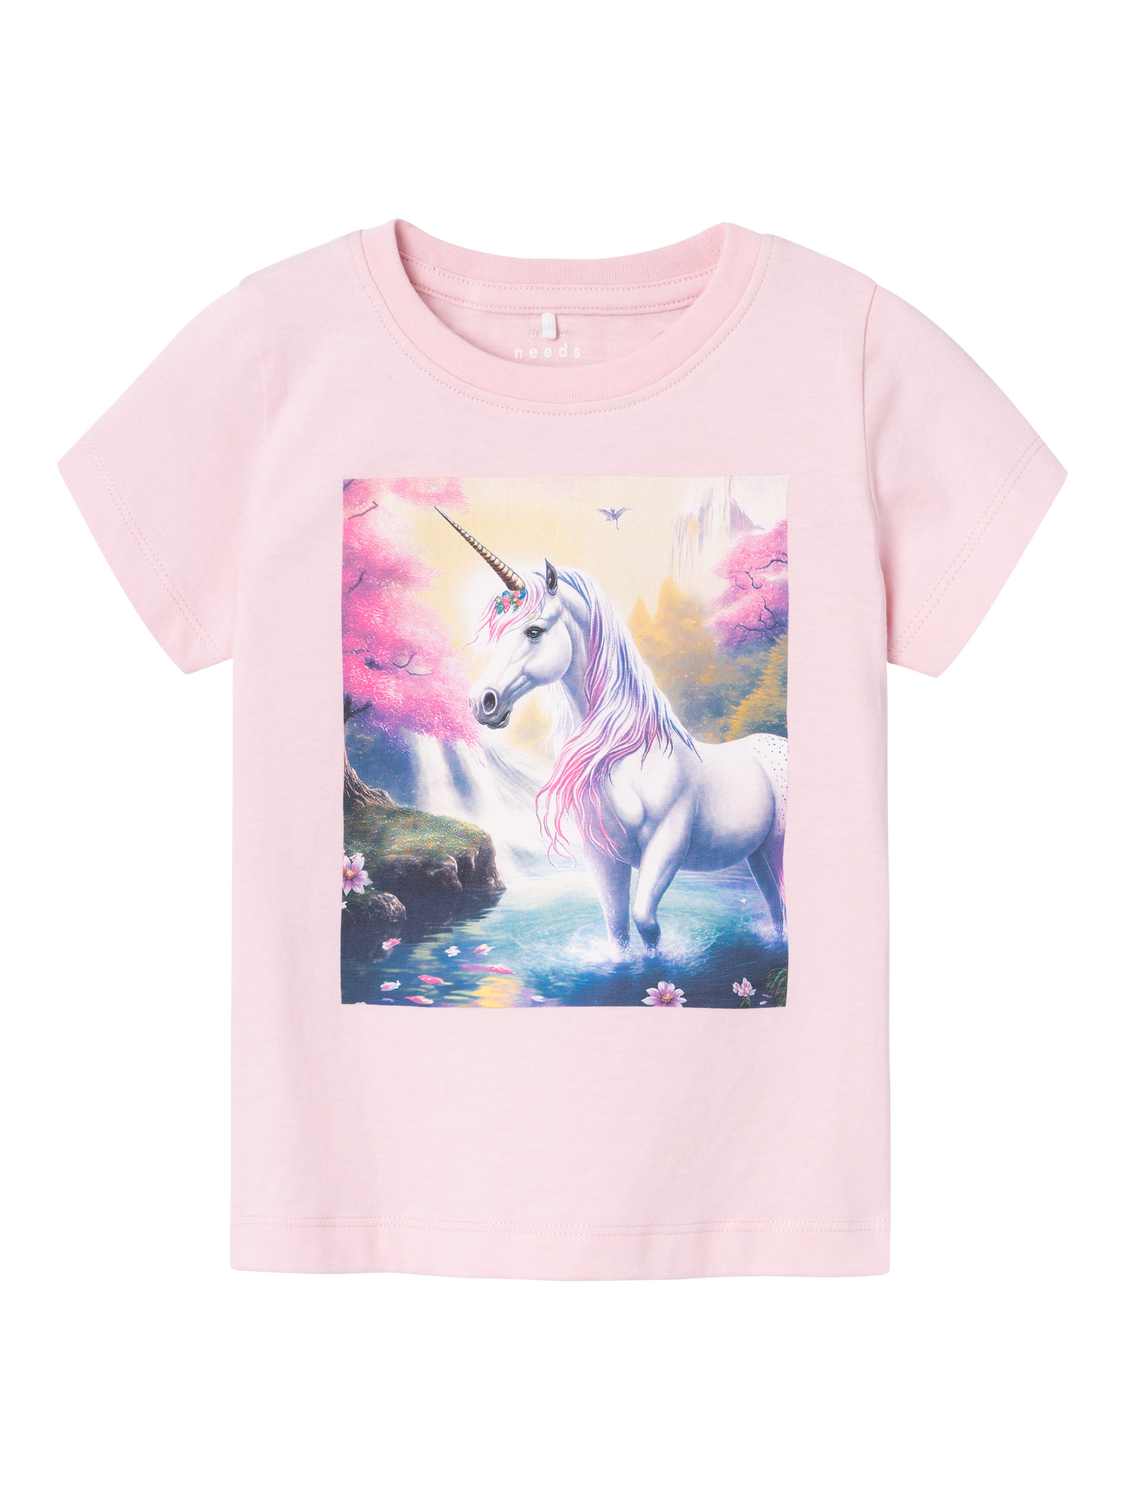 NMFVOTEA T-Shirts & Tops - Parfait Pink